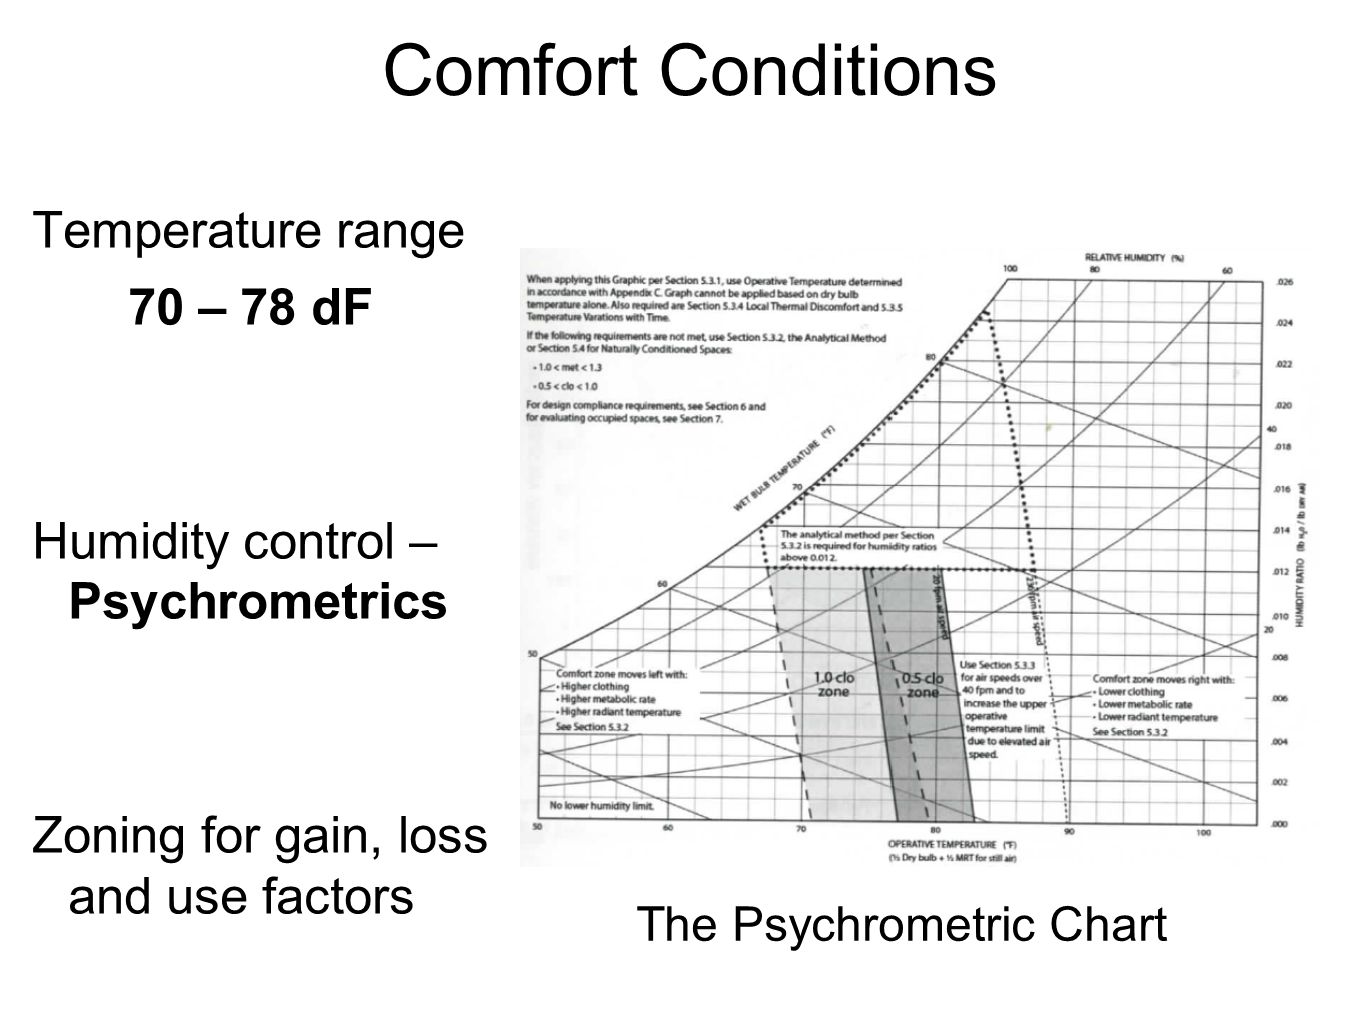 Ashrae Human Comfort Chart